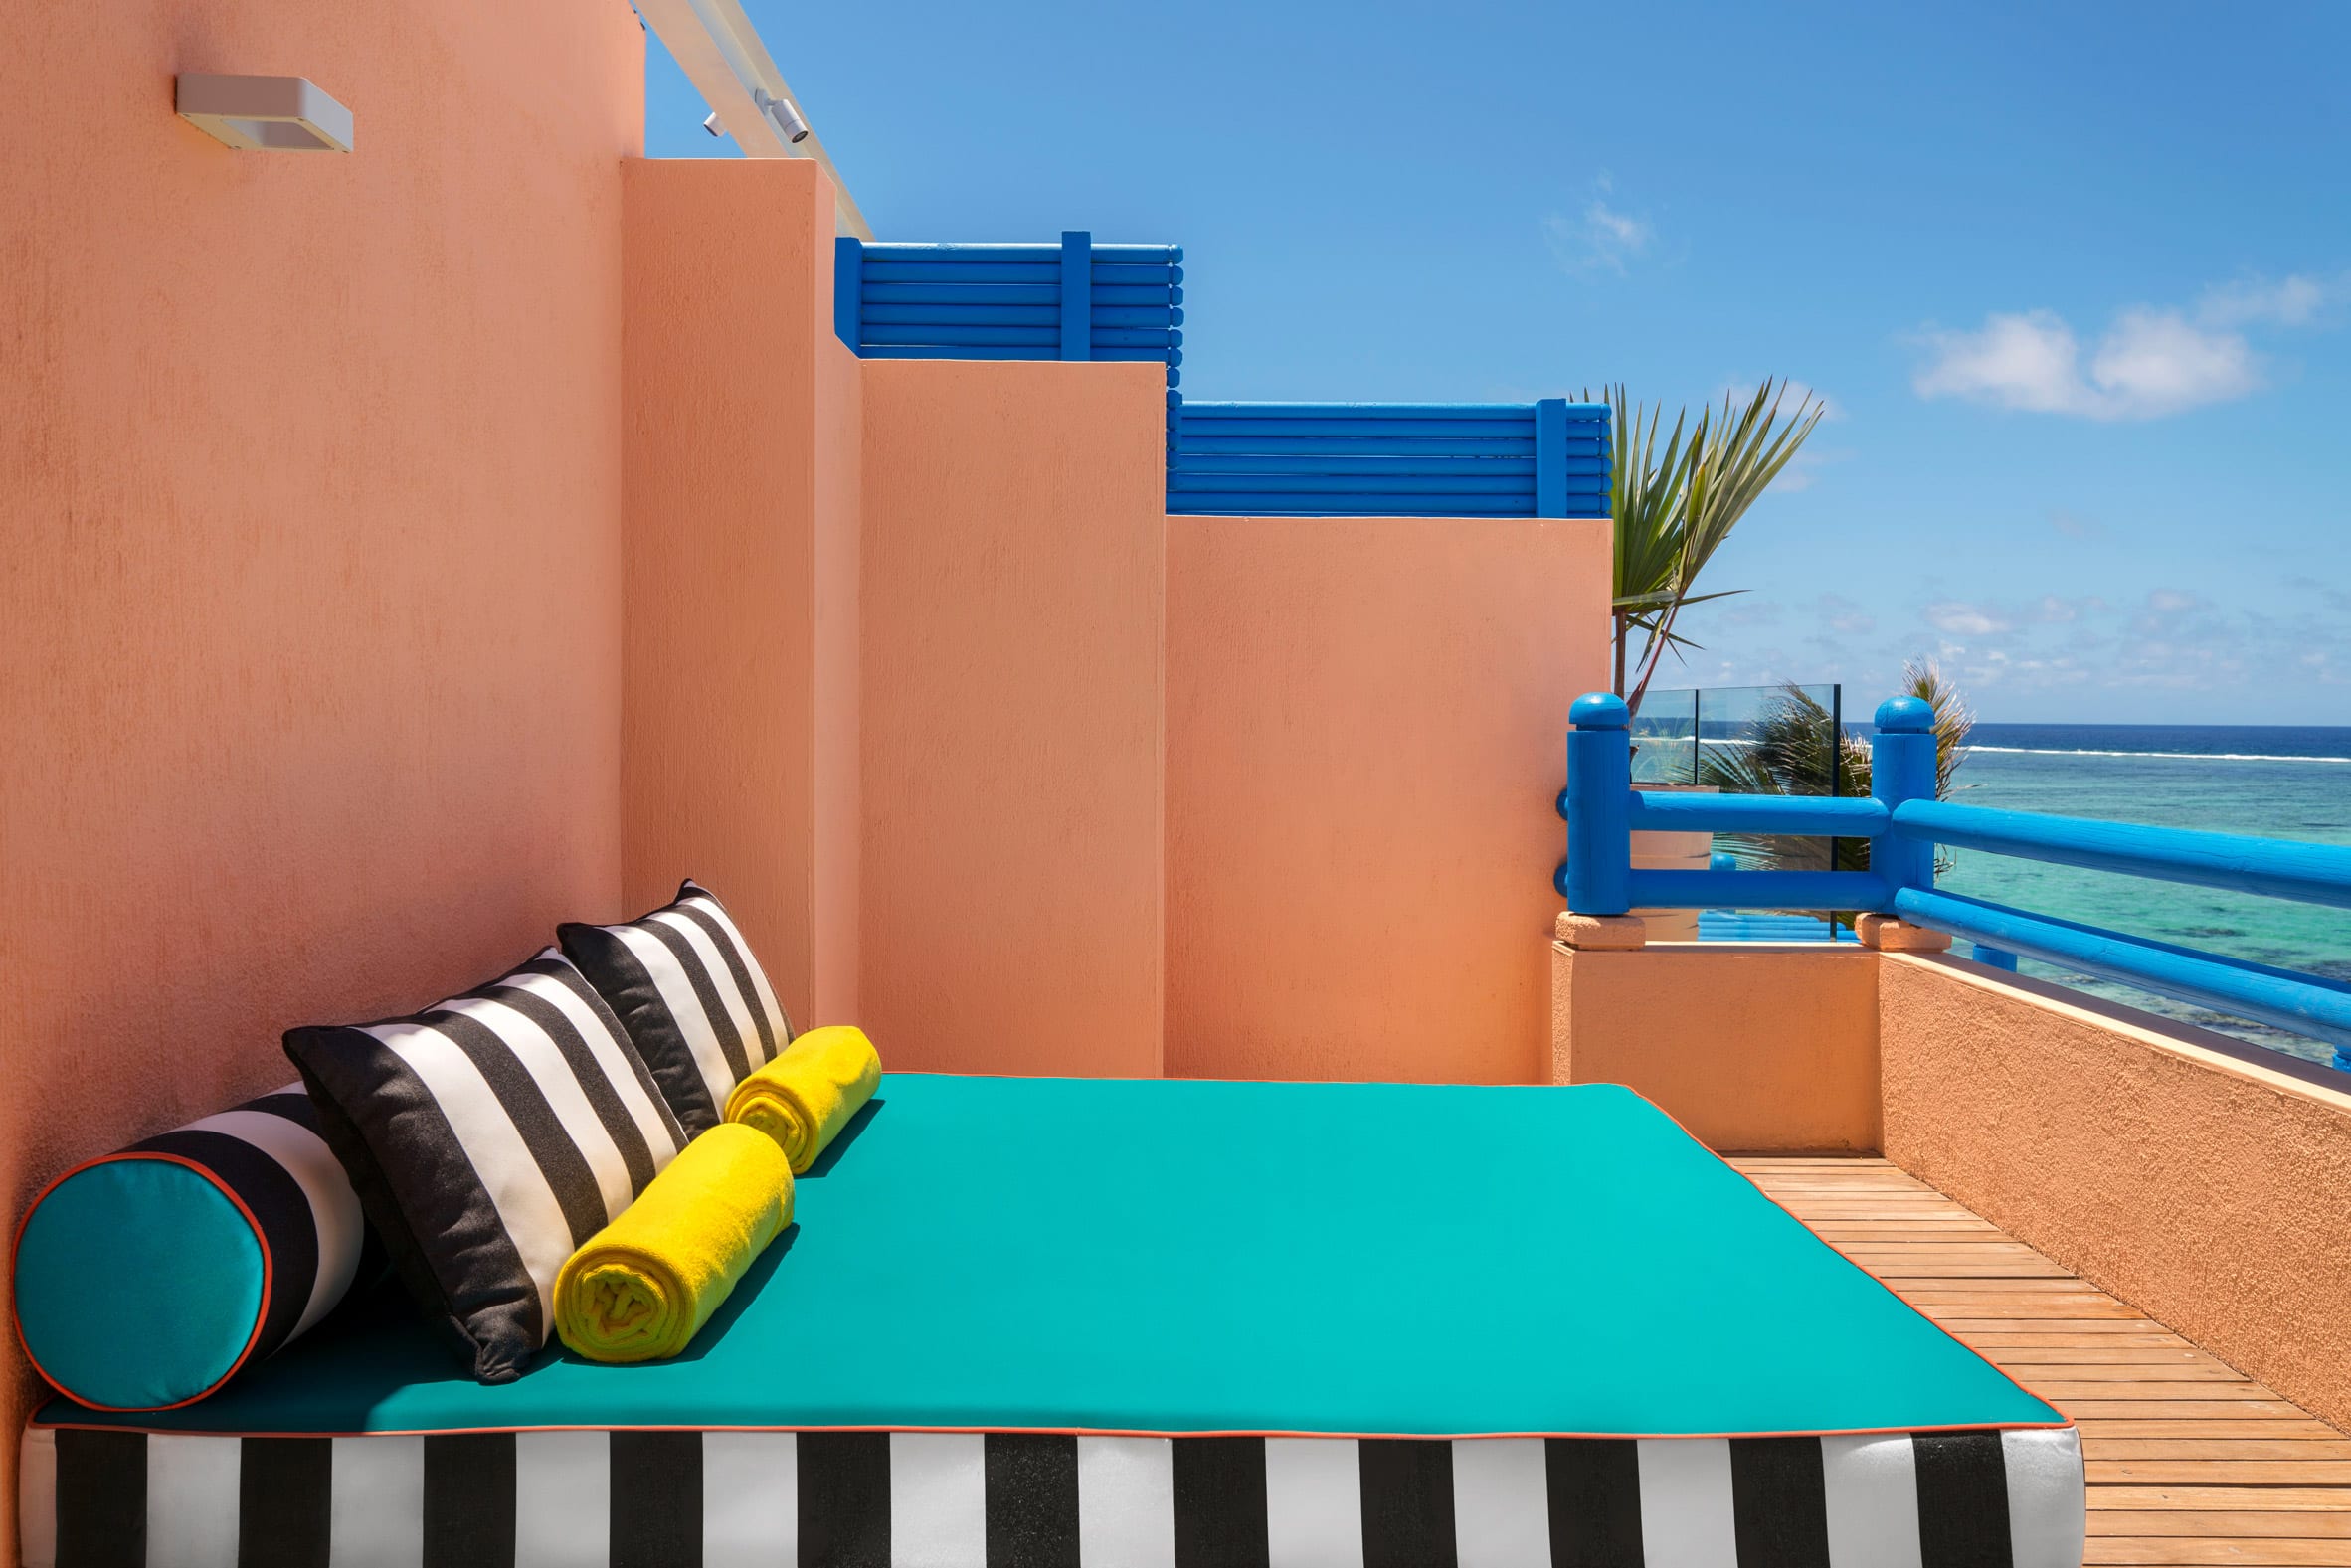 Salt palmar hotels mauritius - memphis design